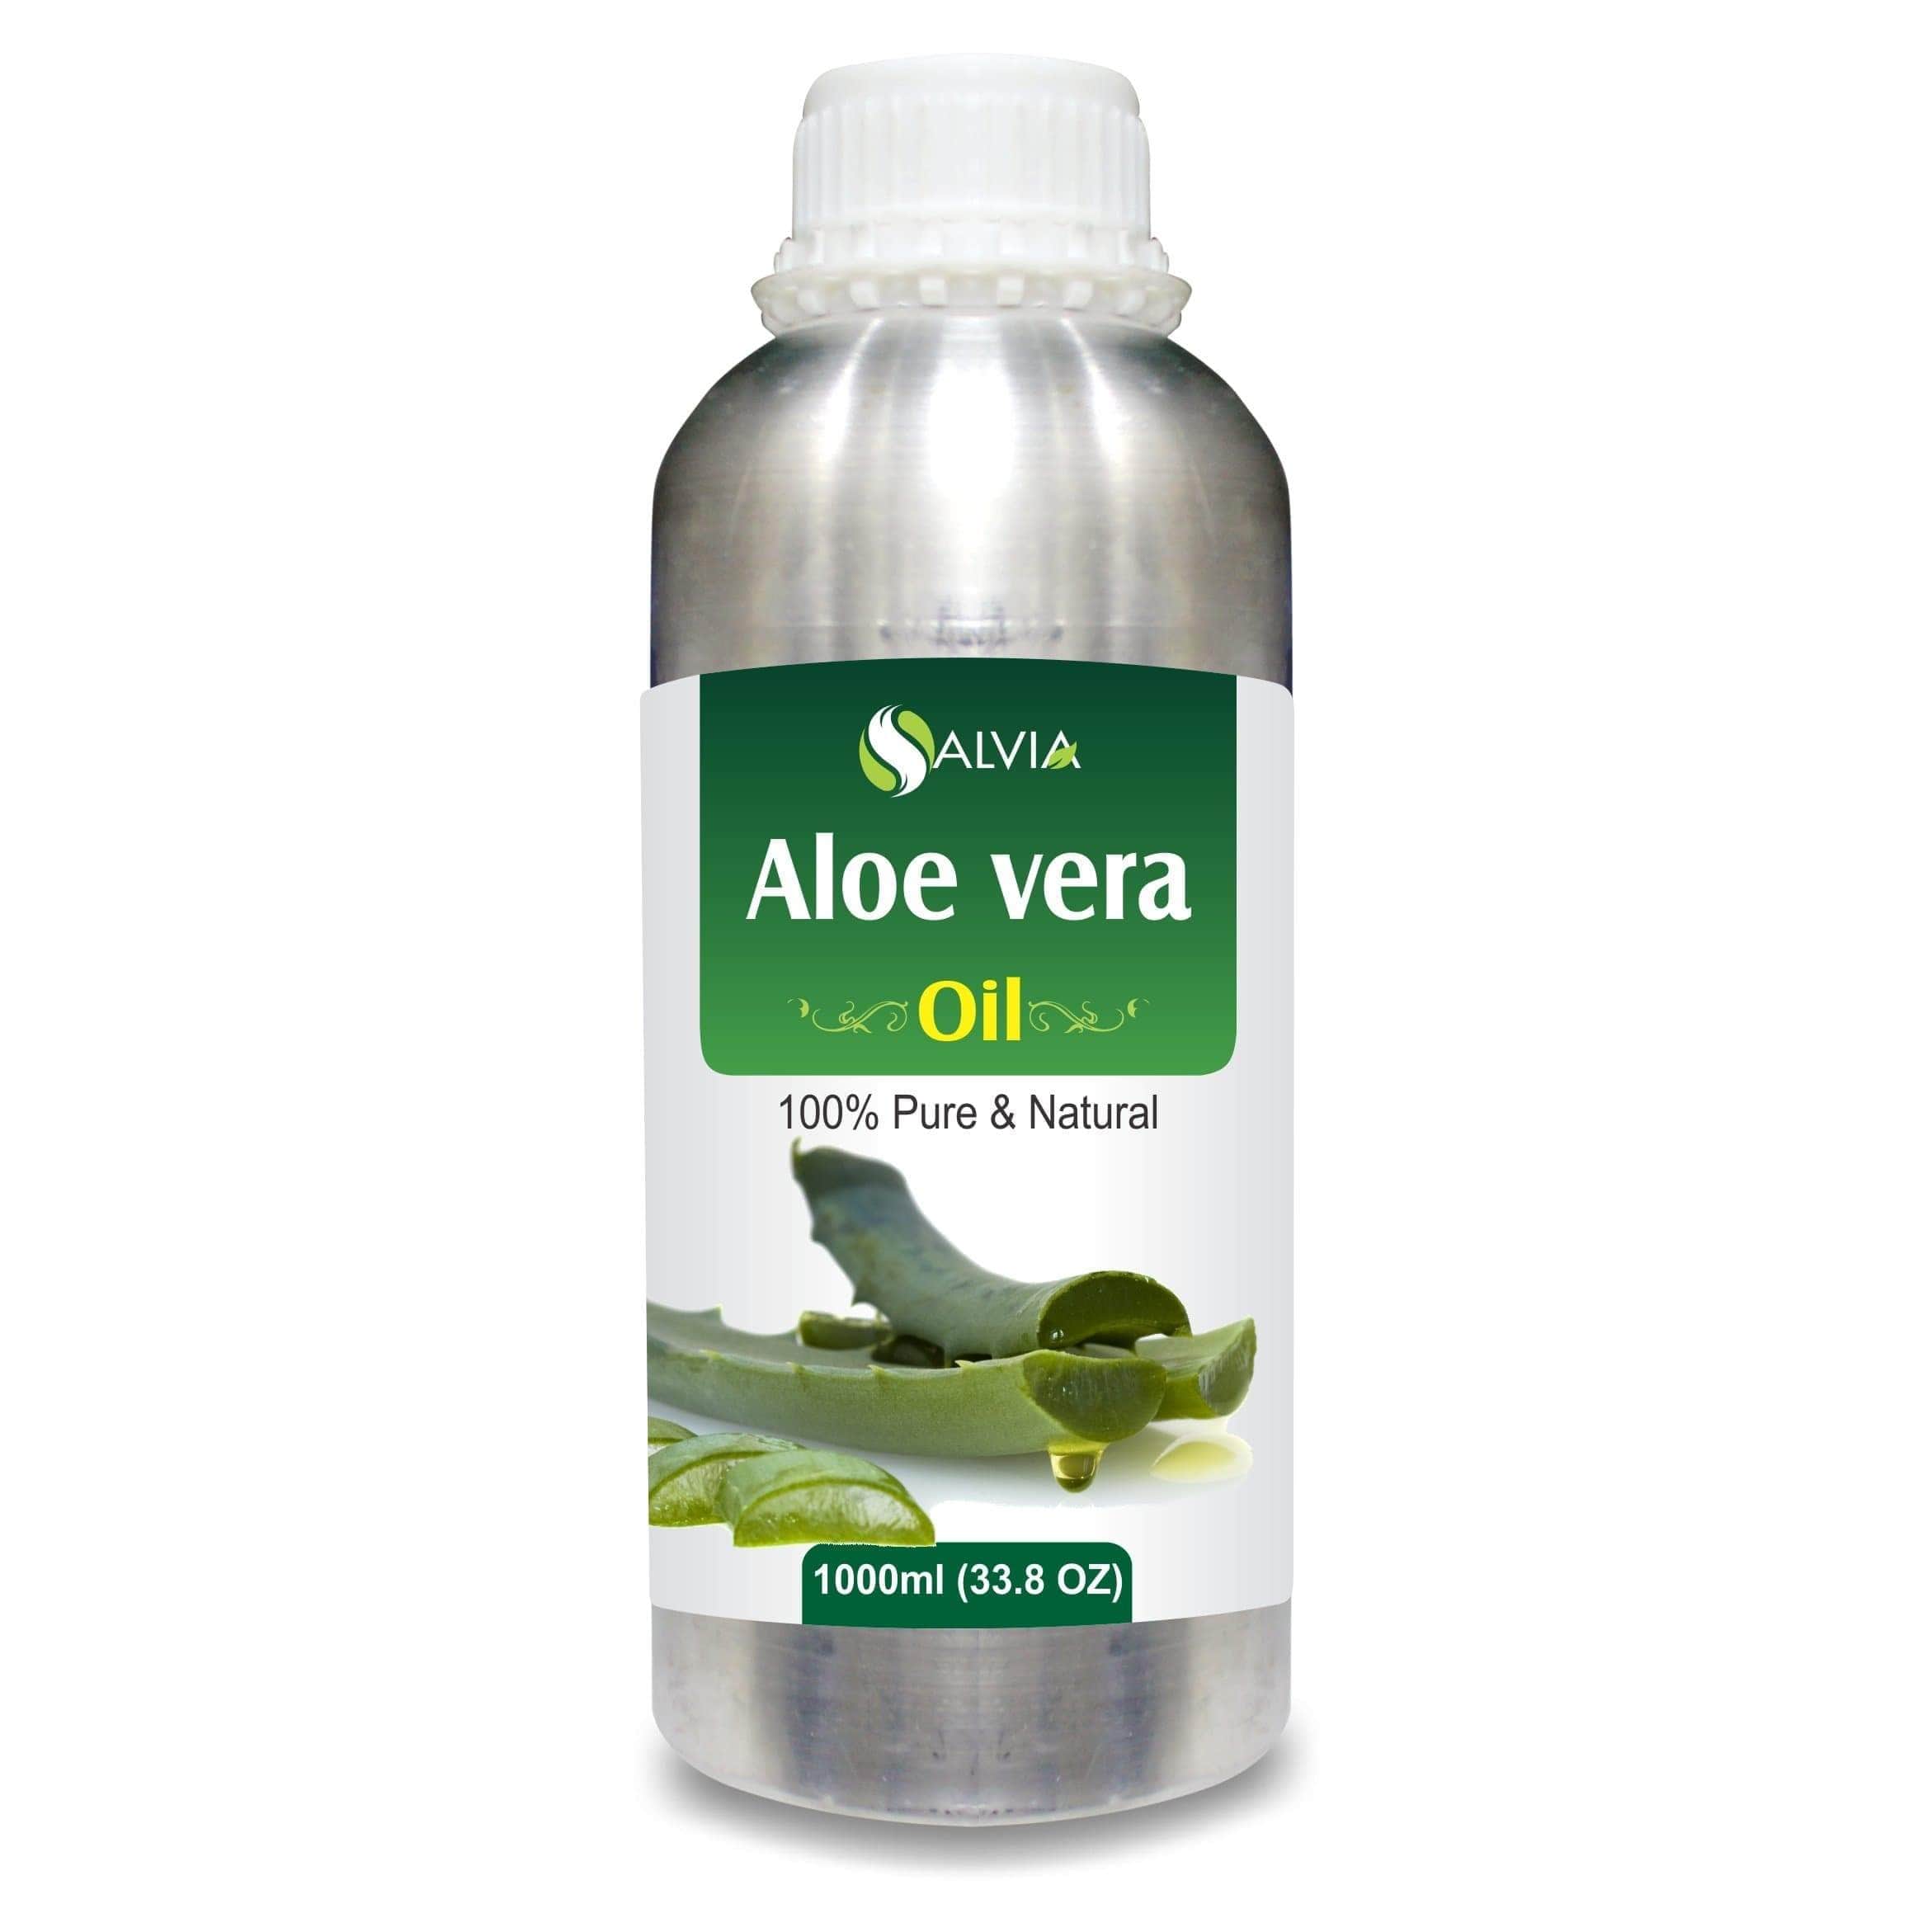 Salvia Natural Carrier Oils 1000ml Aloe Vera Oil (Aloe Barbadensis) 100% Pure & Natural Carrier Oil